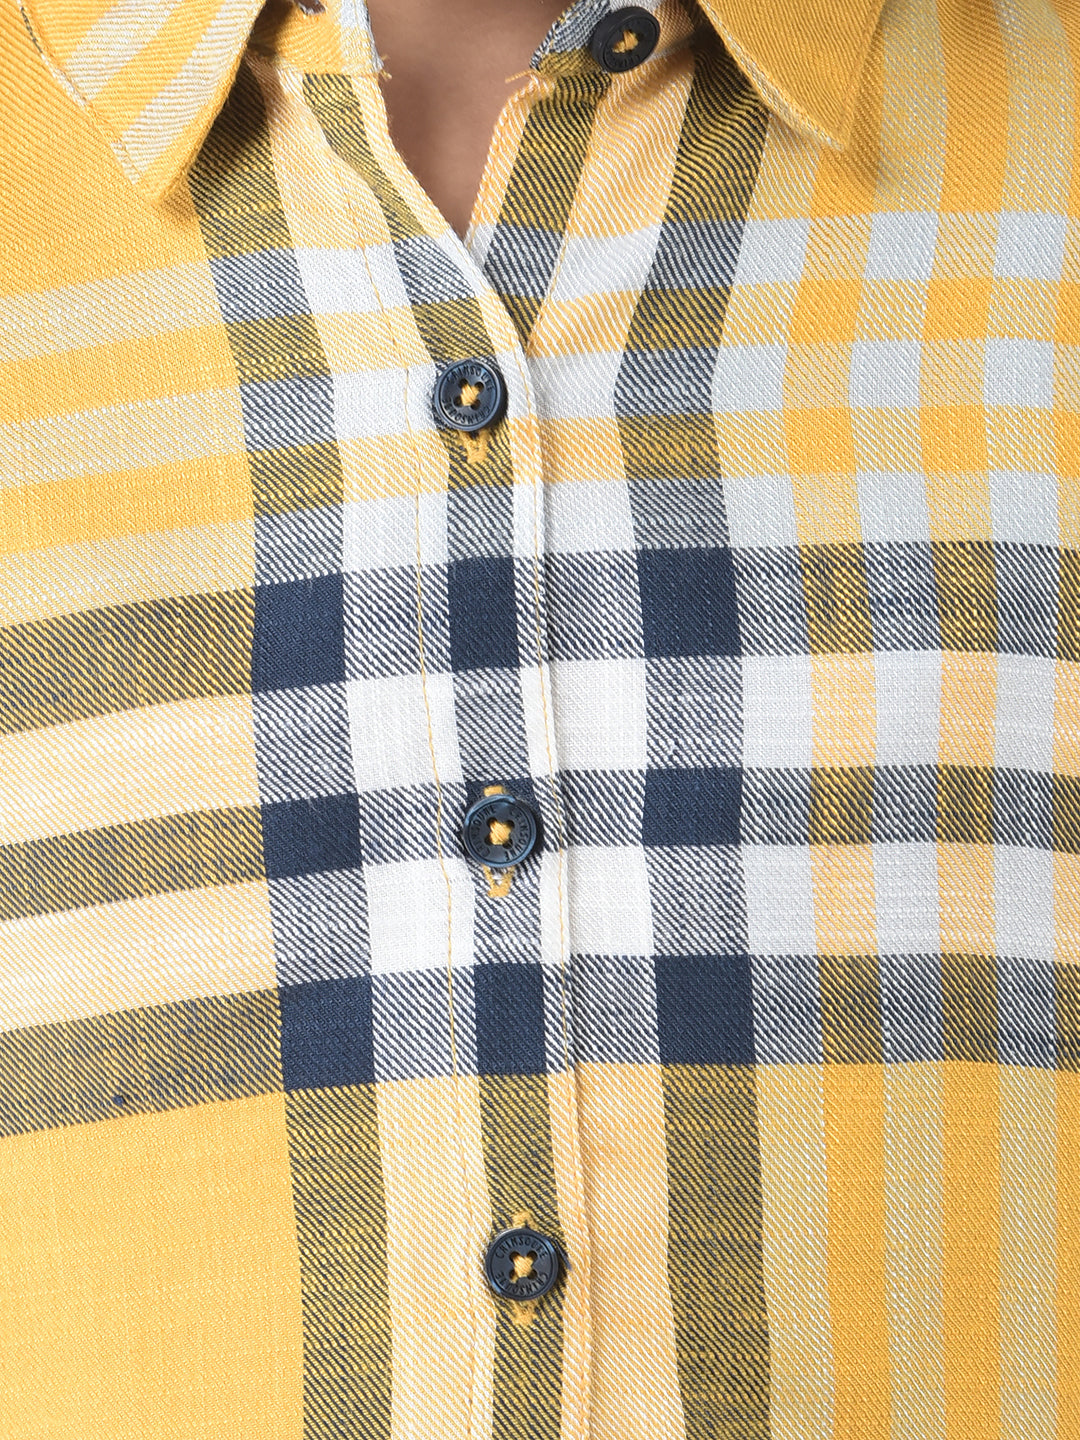  Cropped Yellow Shirt with Tartan Checks 